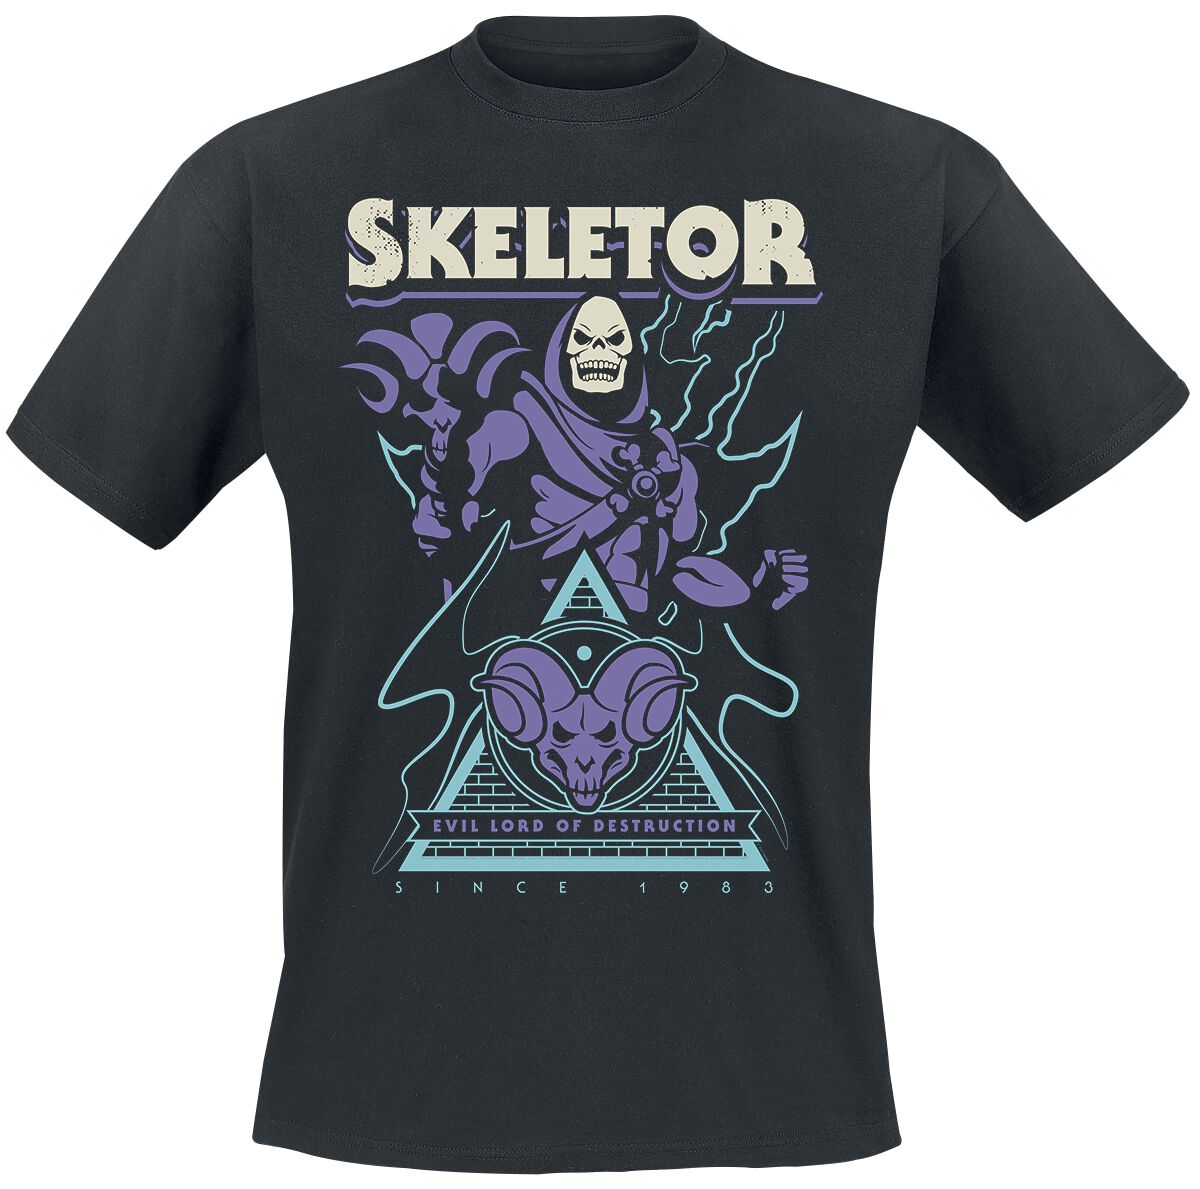 He-Man Skeletor - Pyramide T-Shirt schwarz in 3XL